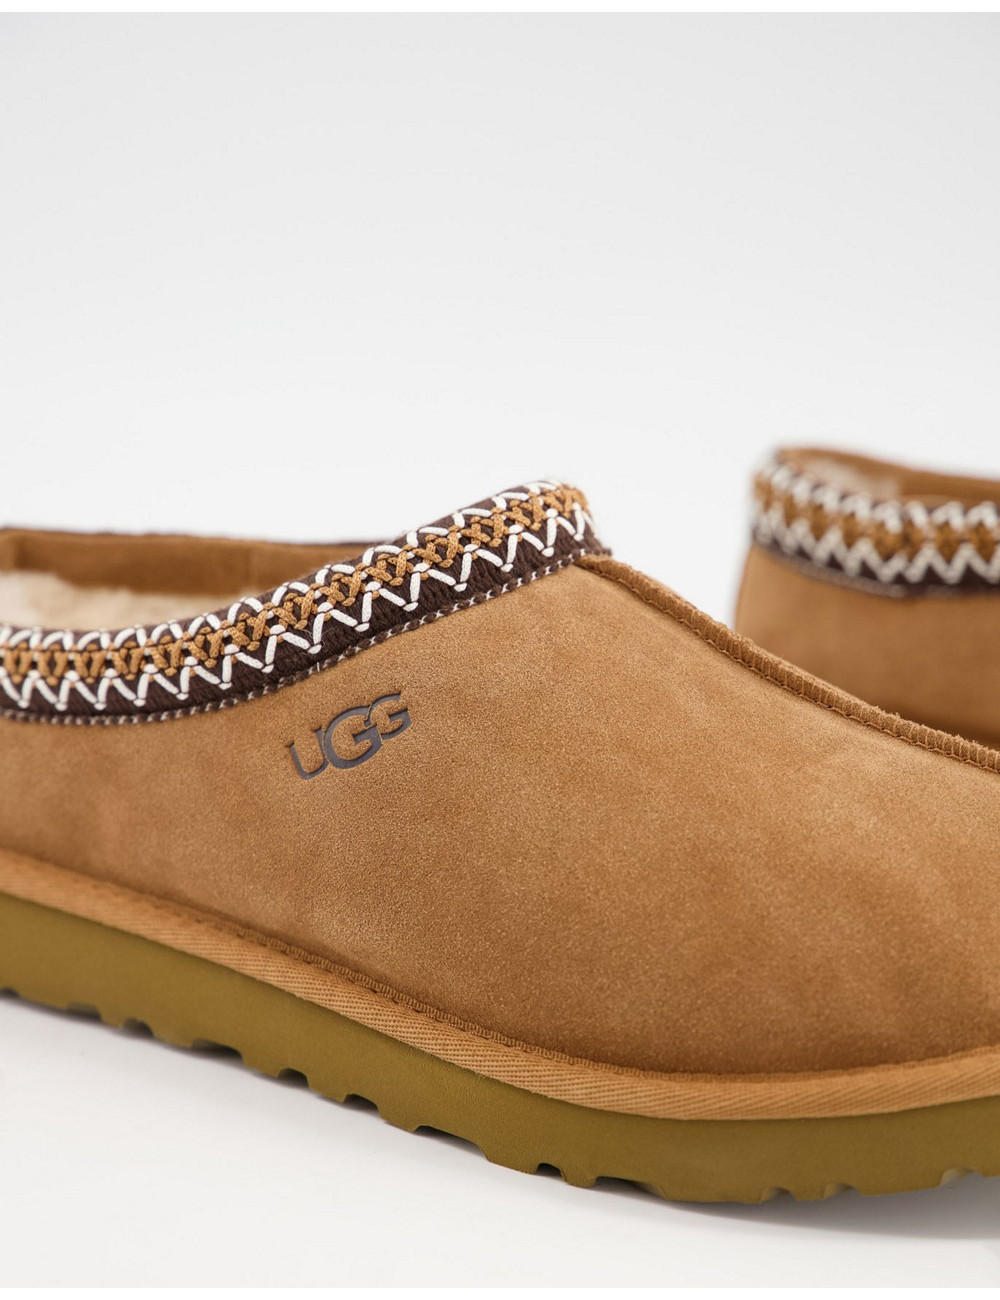 UGG tasman slippers tan